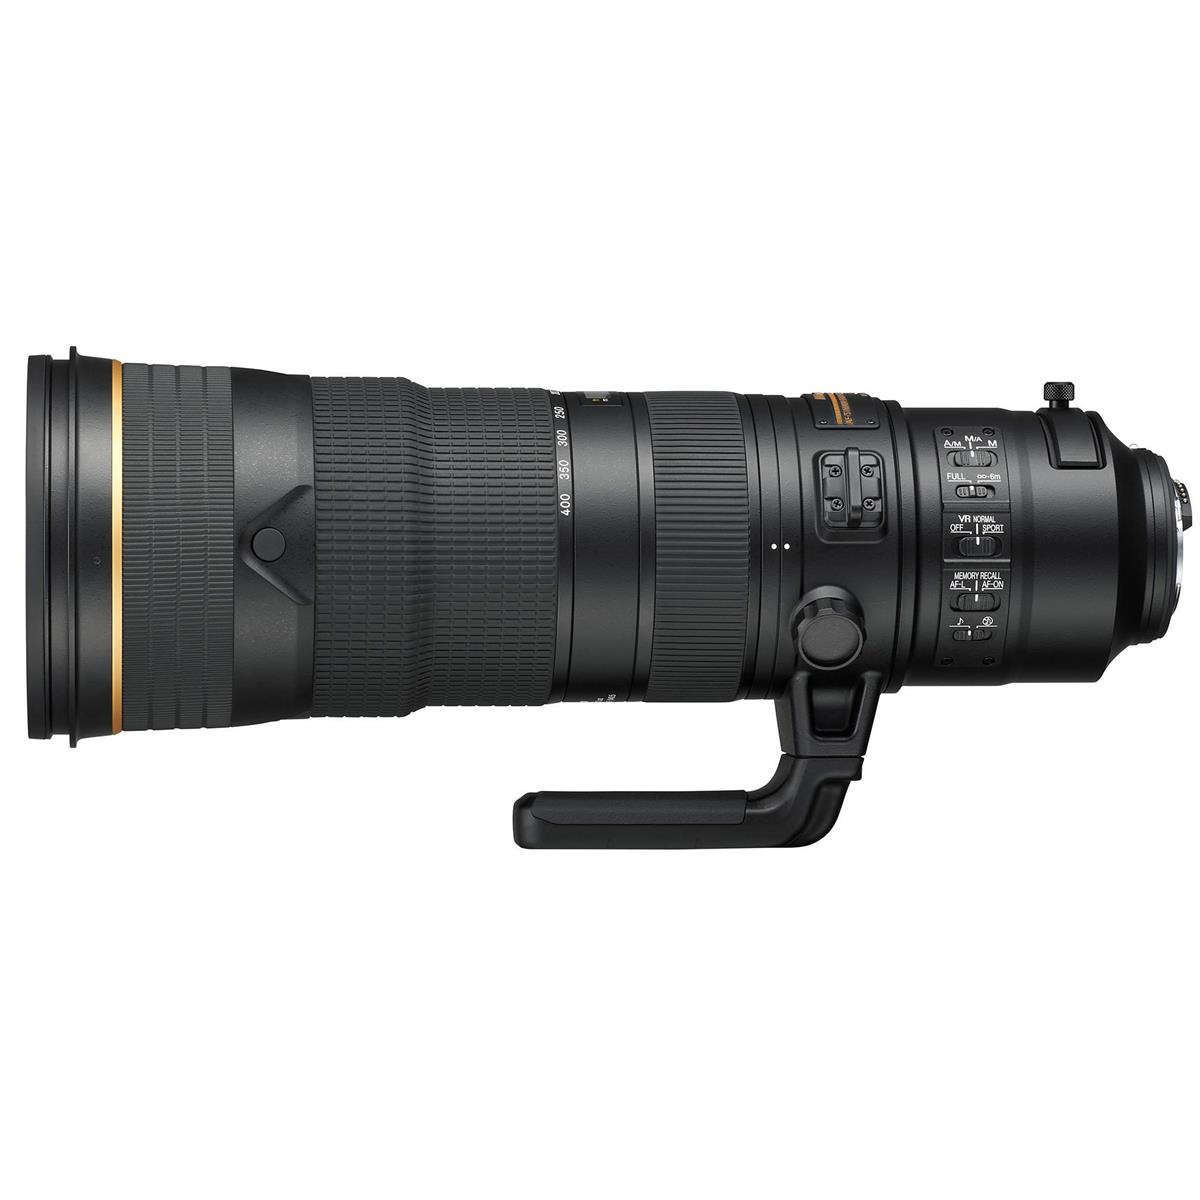 New Nikon 180-400mm Lens announced